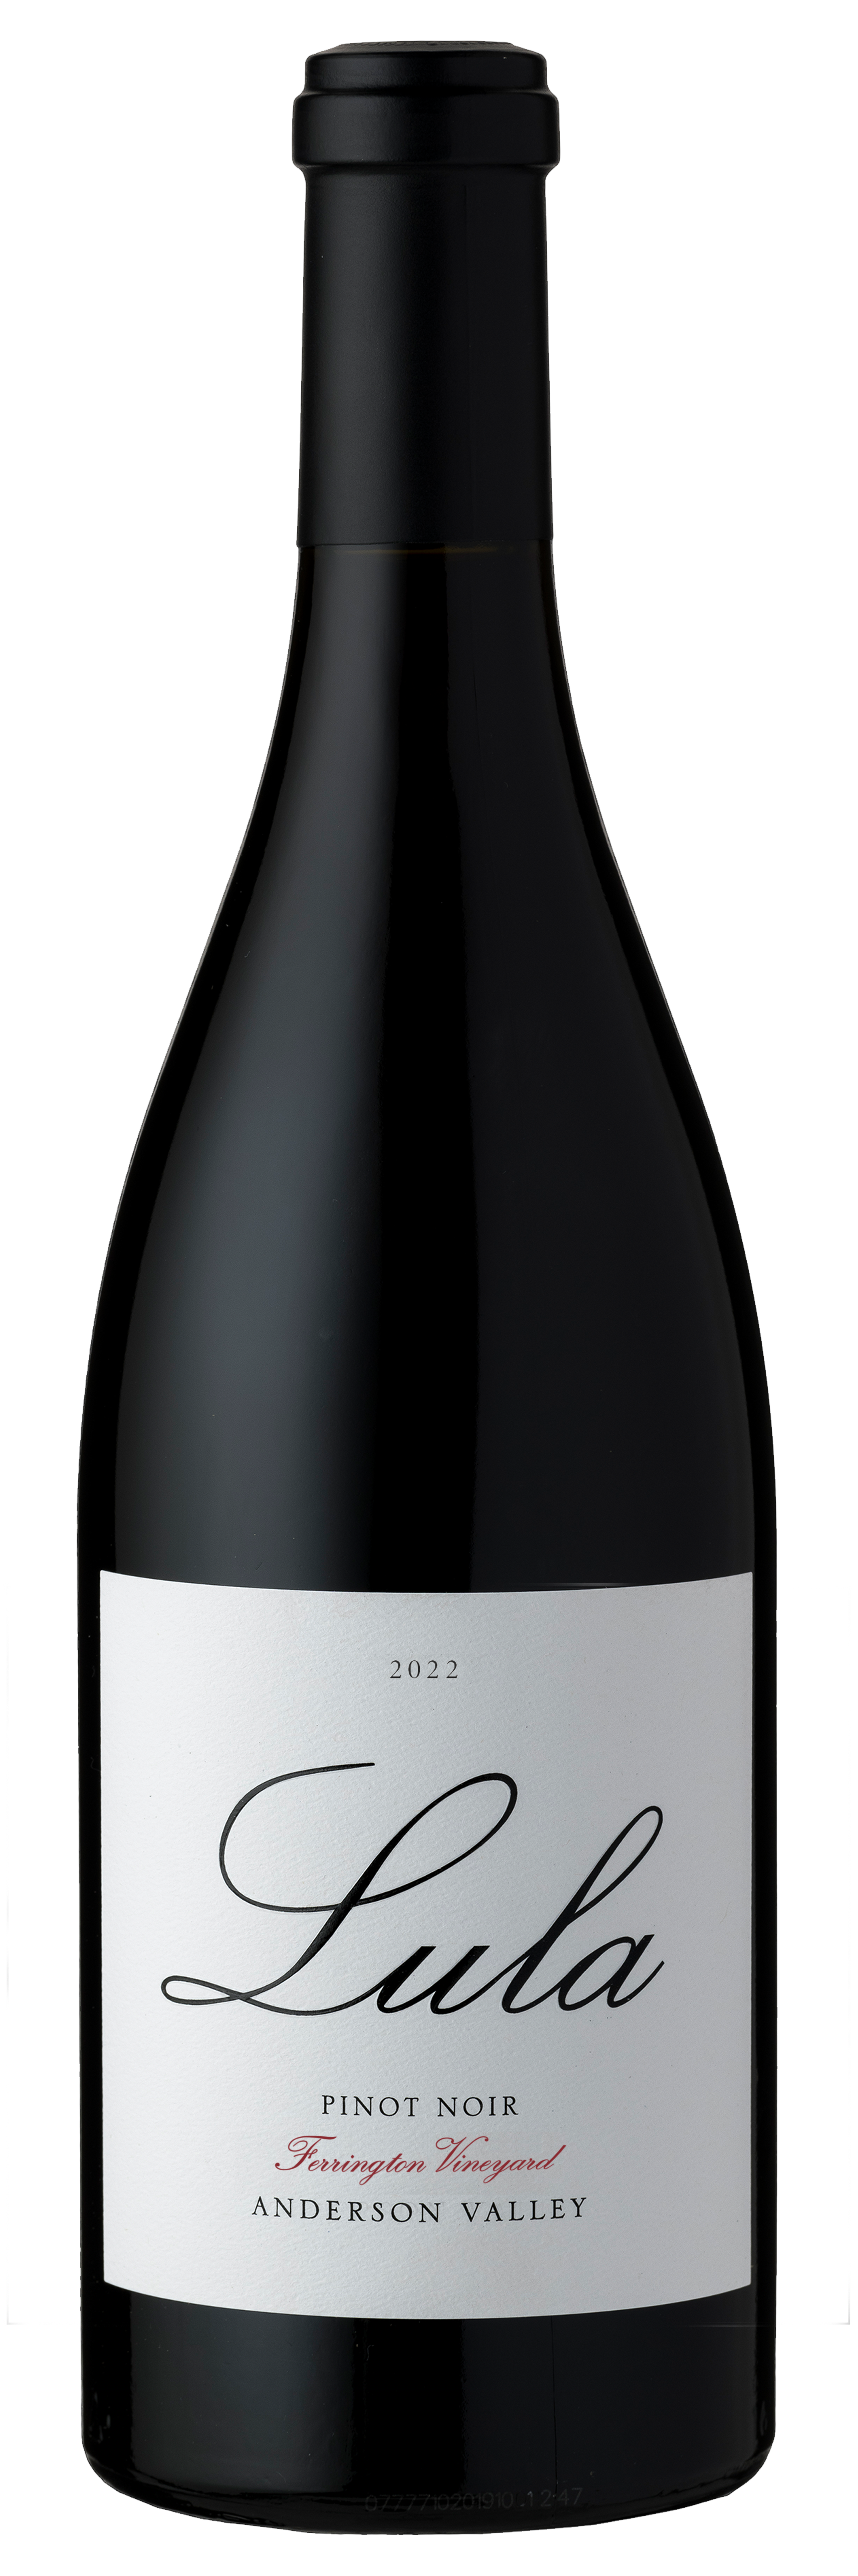 Product Image for 2022 Ferrington Pinot Noir